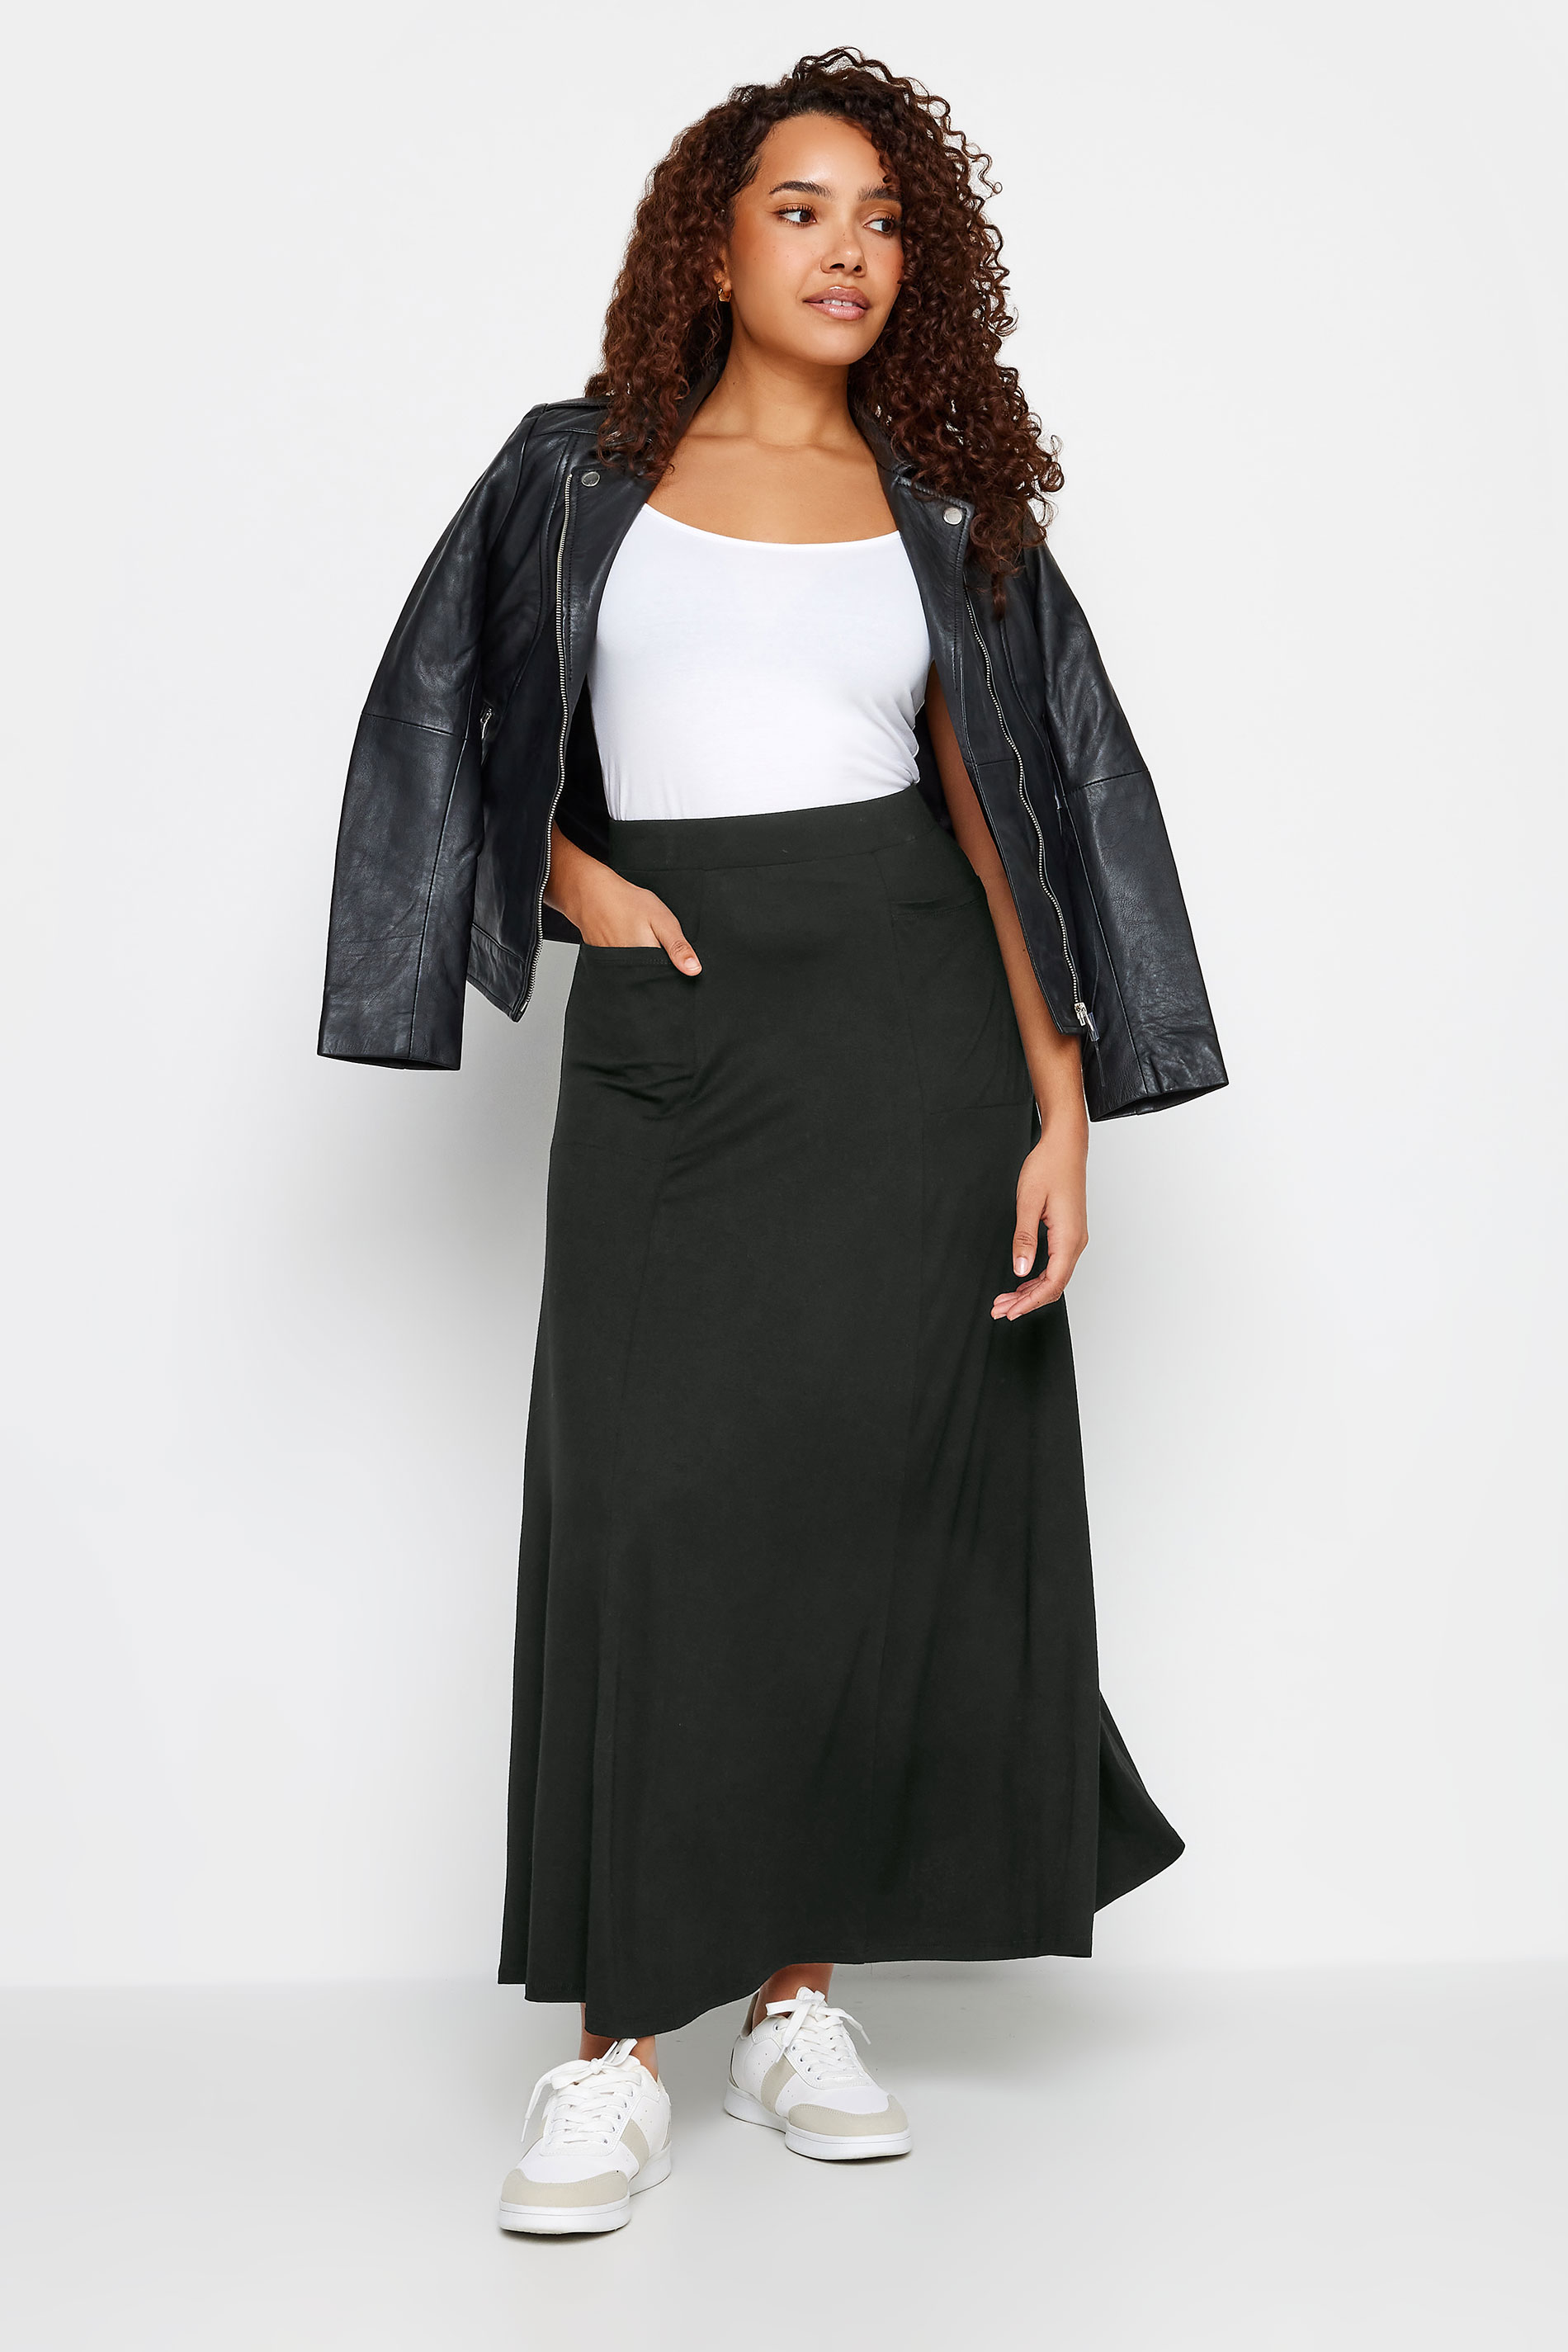 M&Co Black Pocket Maxi Skirt | M&Co 2